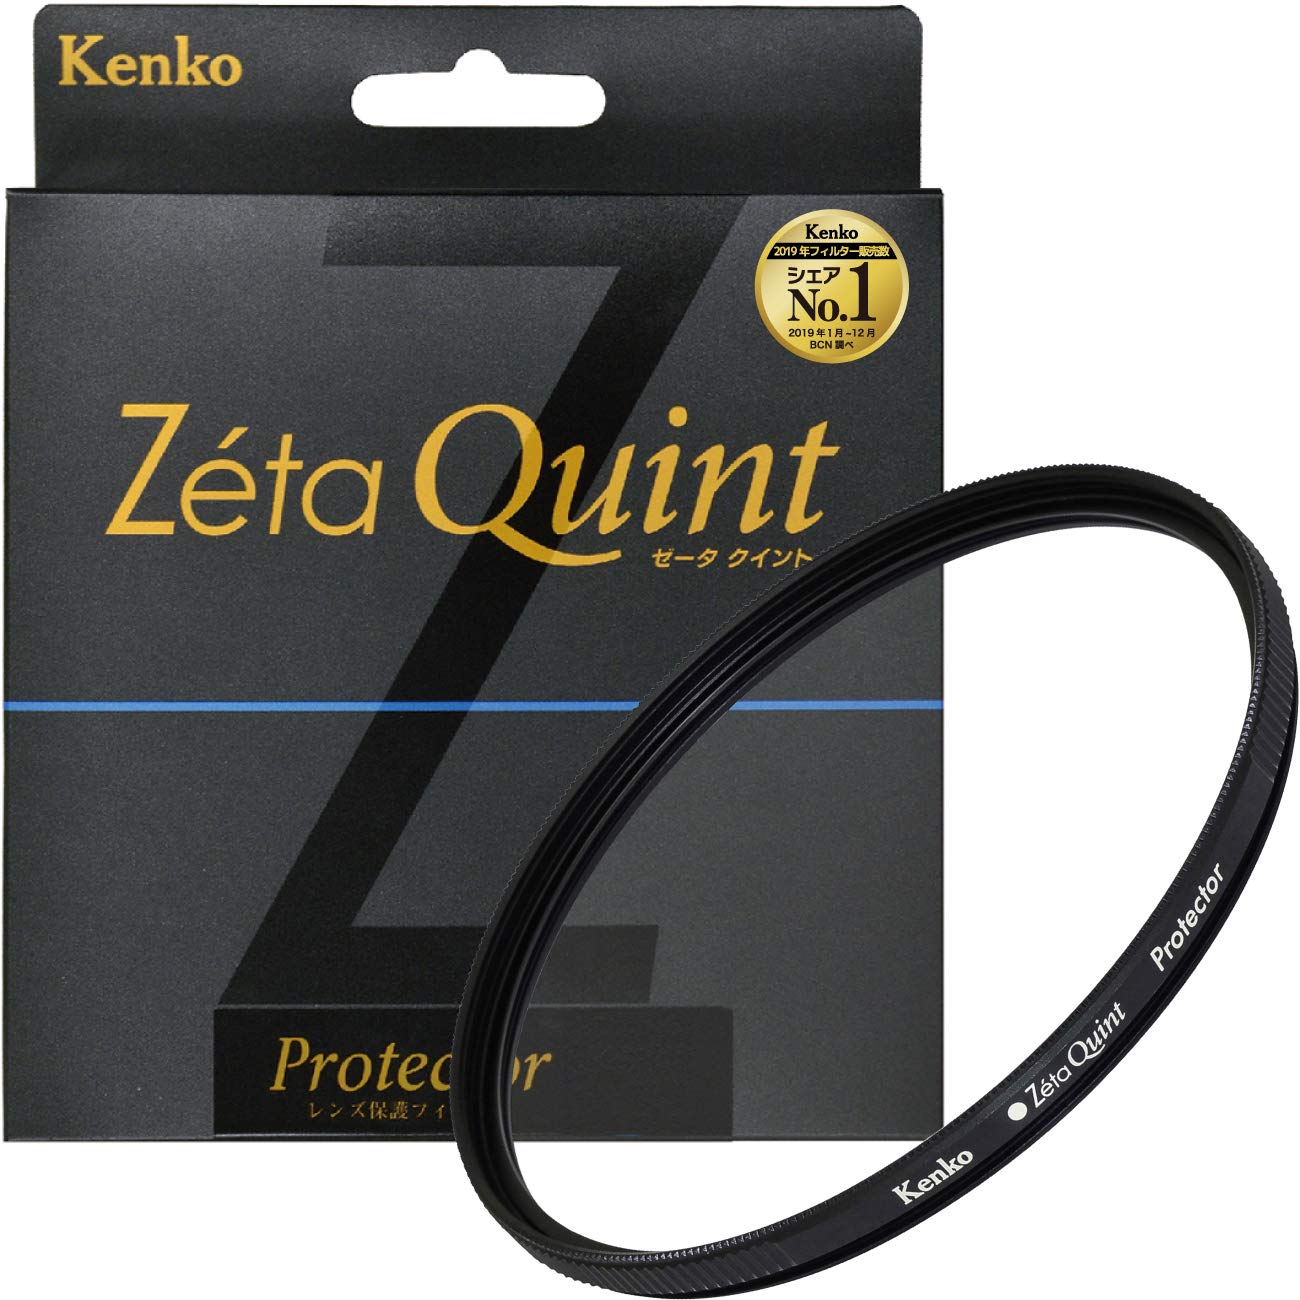 Kenko レンズフィルター Zeta Quint プロテクター 58mm レンズ保護用 118528